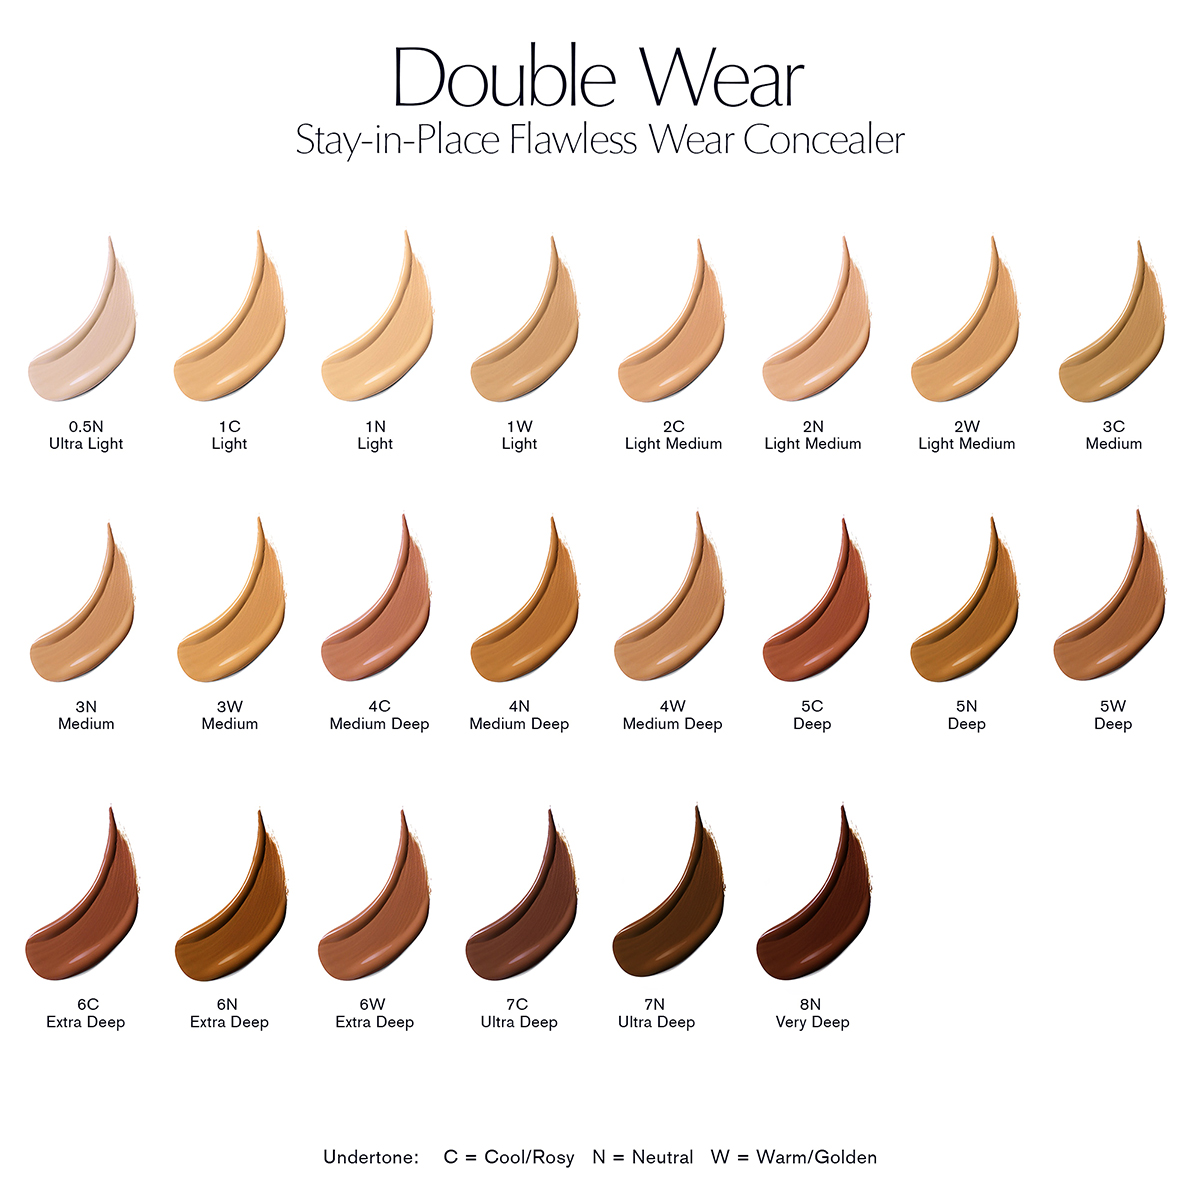 Estee Lauder(tm) Double Wear Stay-in-Place Flawless Concealer